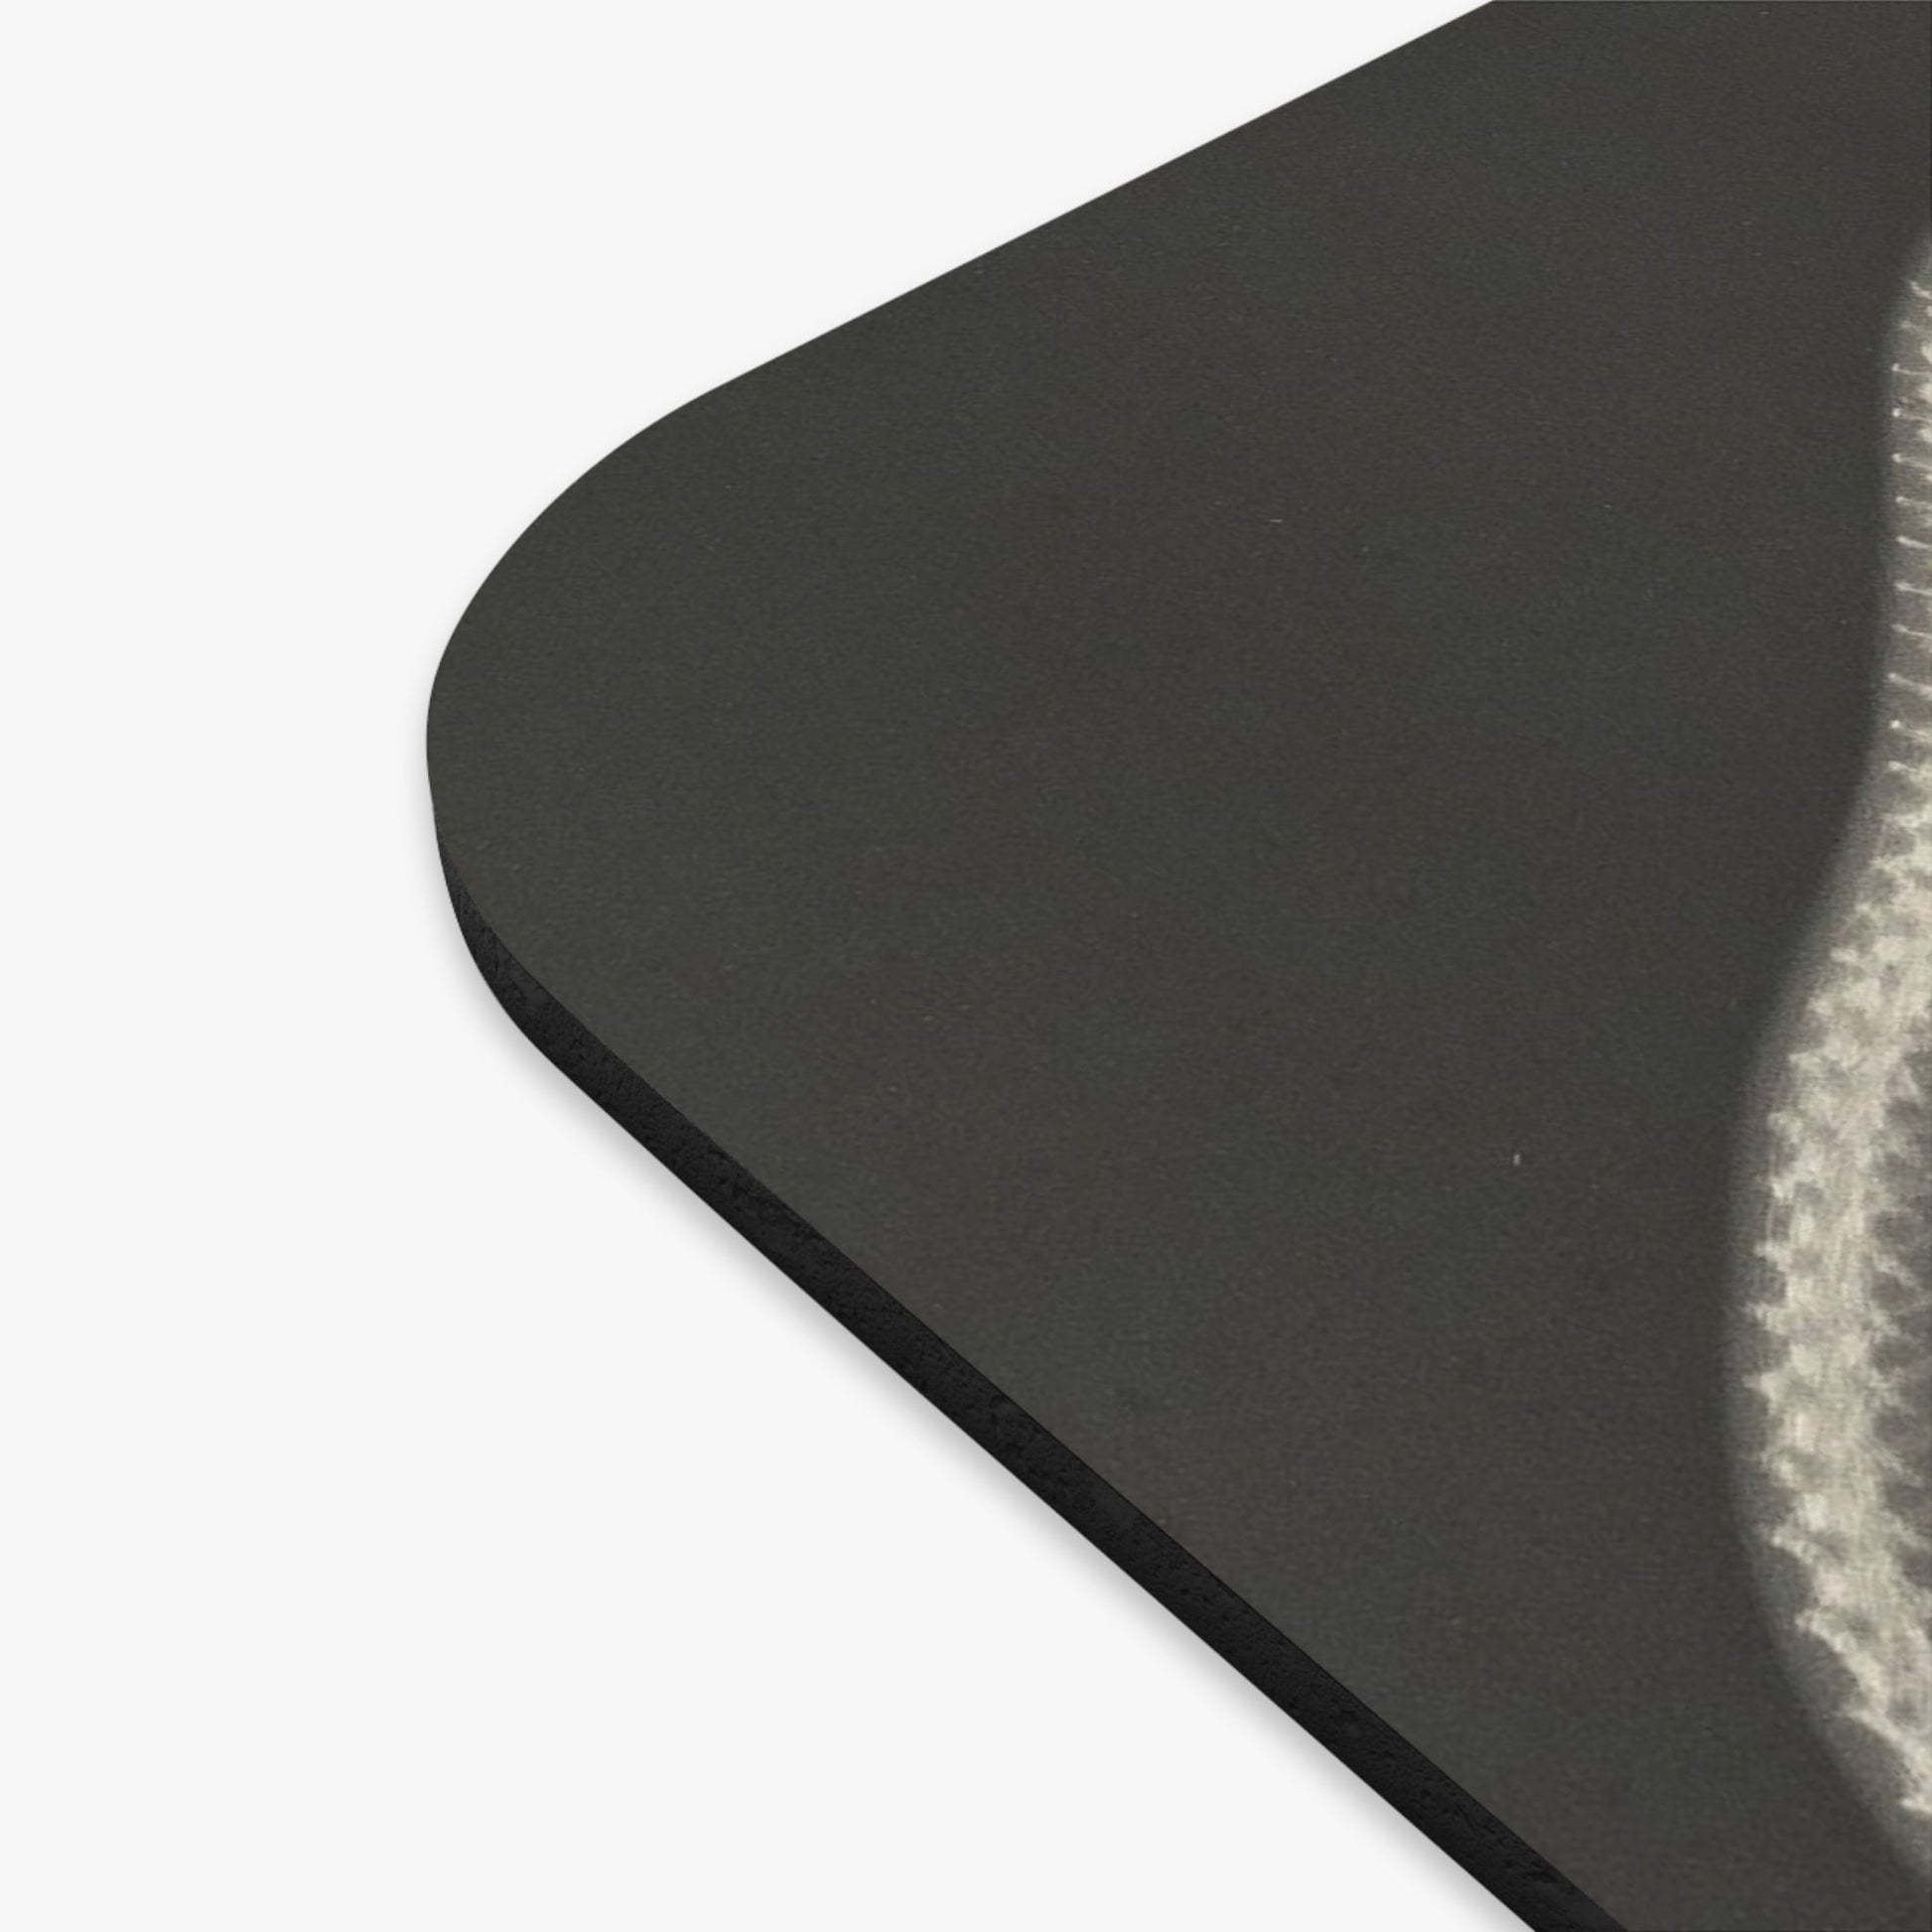 Black and White Snake Vintage Mouse Pad Design Close Up